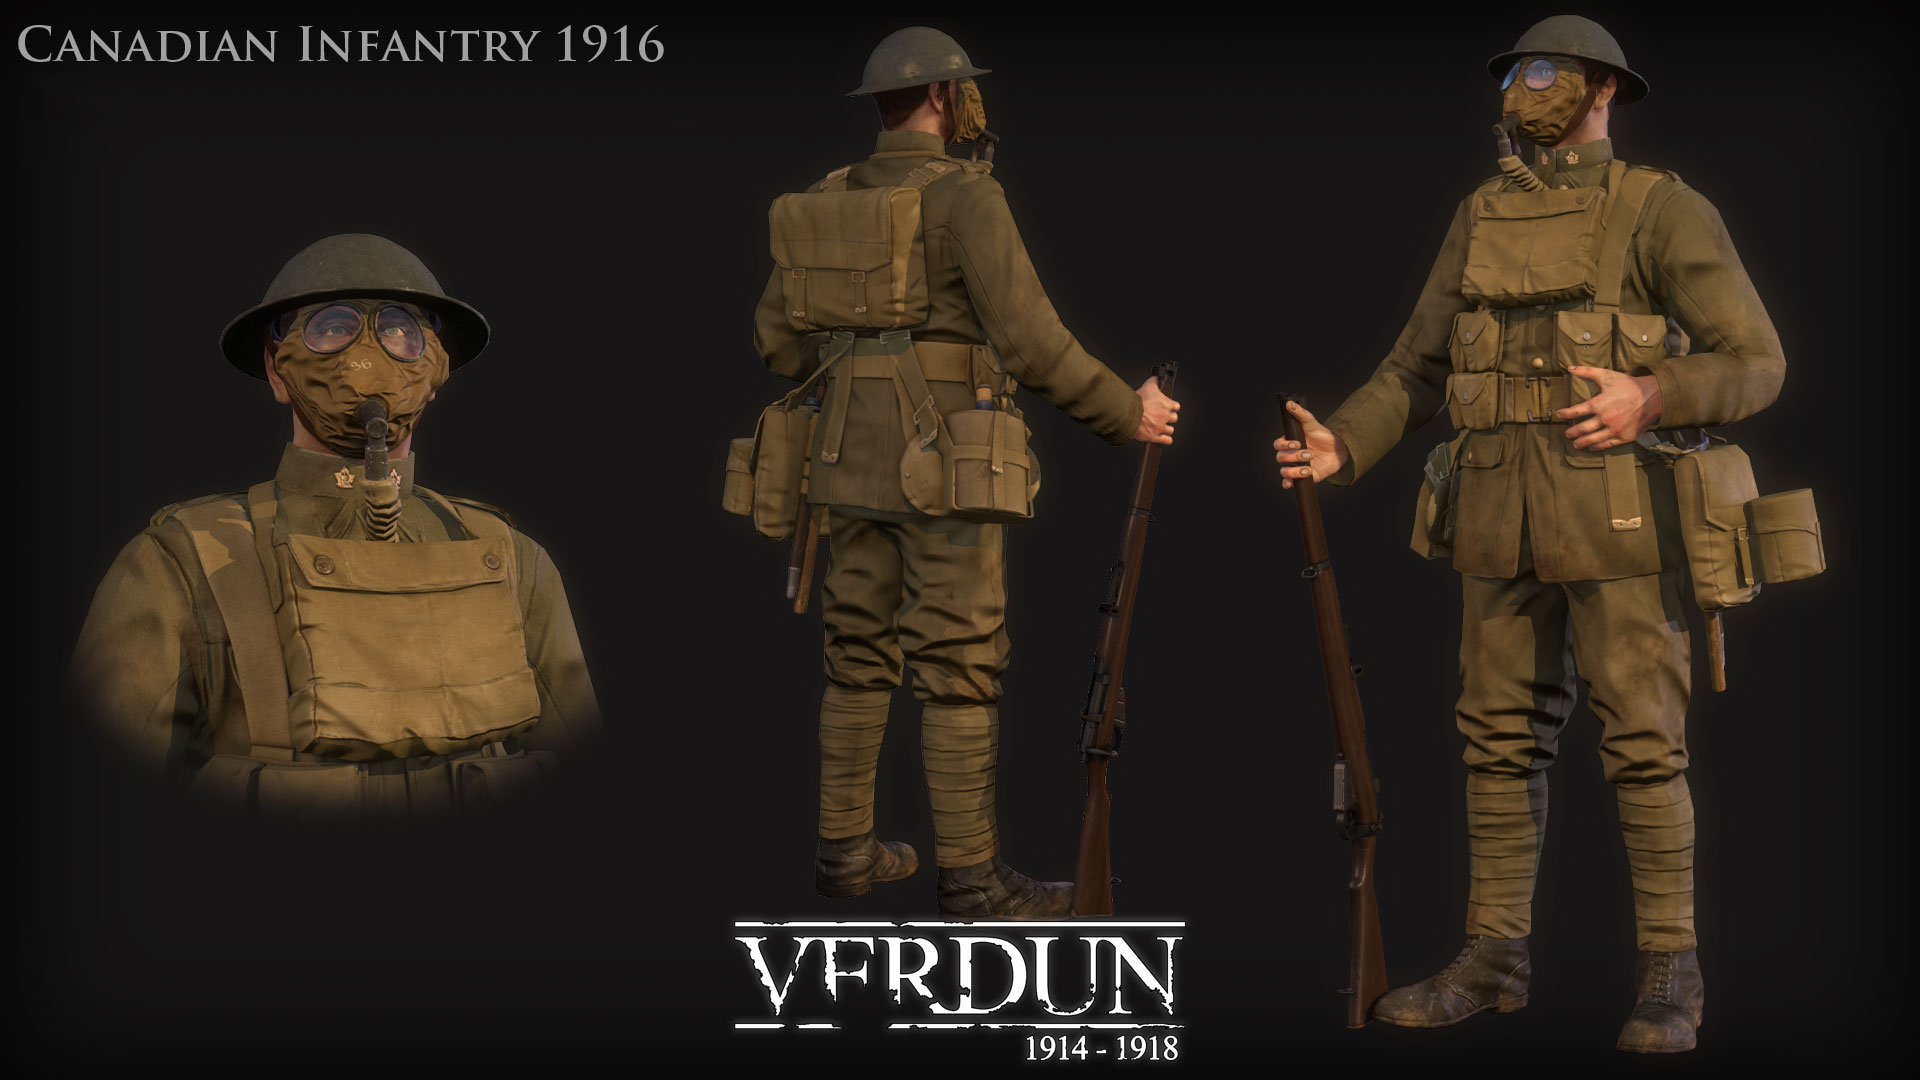 Им верден. Verdun игра форма. Verdun игра форма французского. Верден игра русская армия.